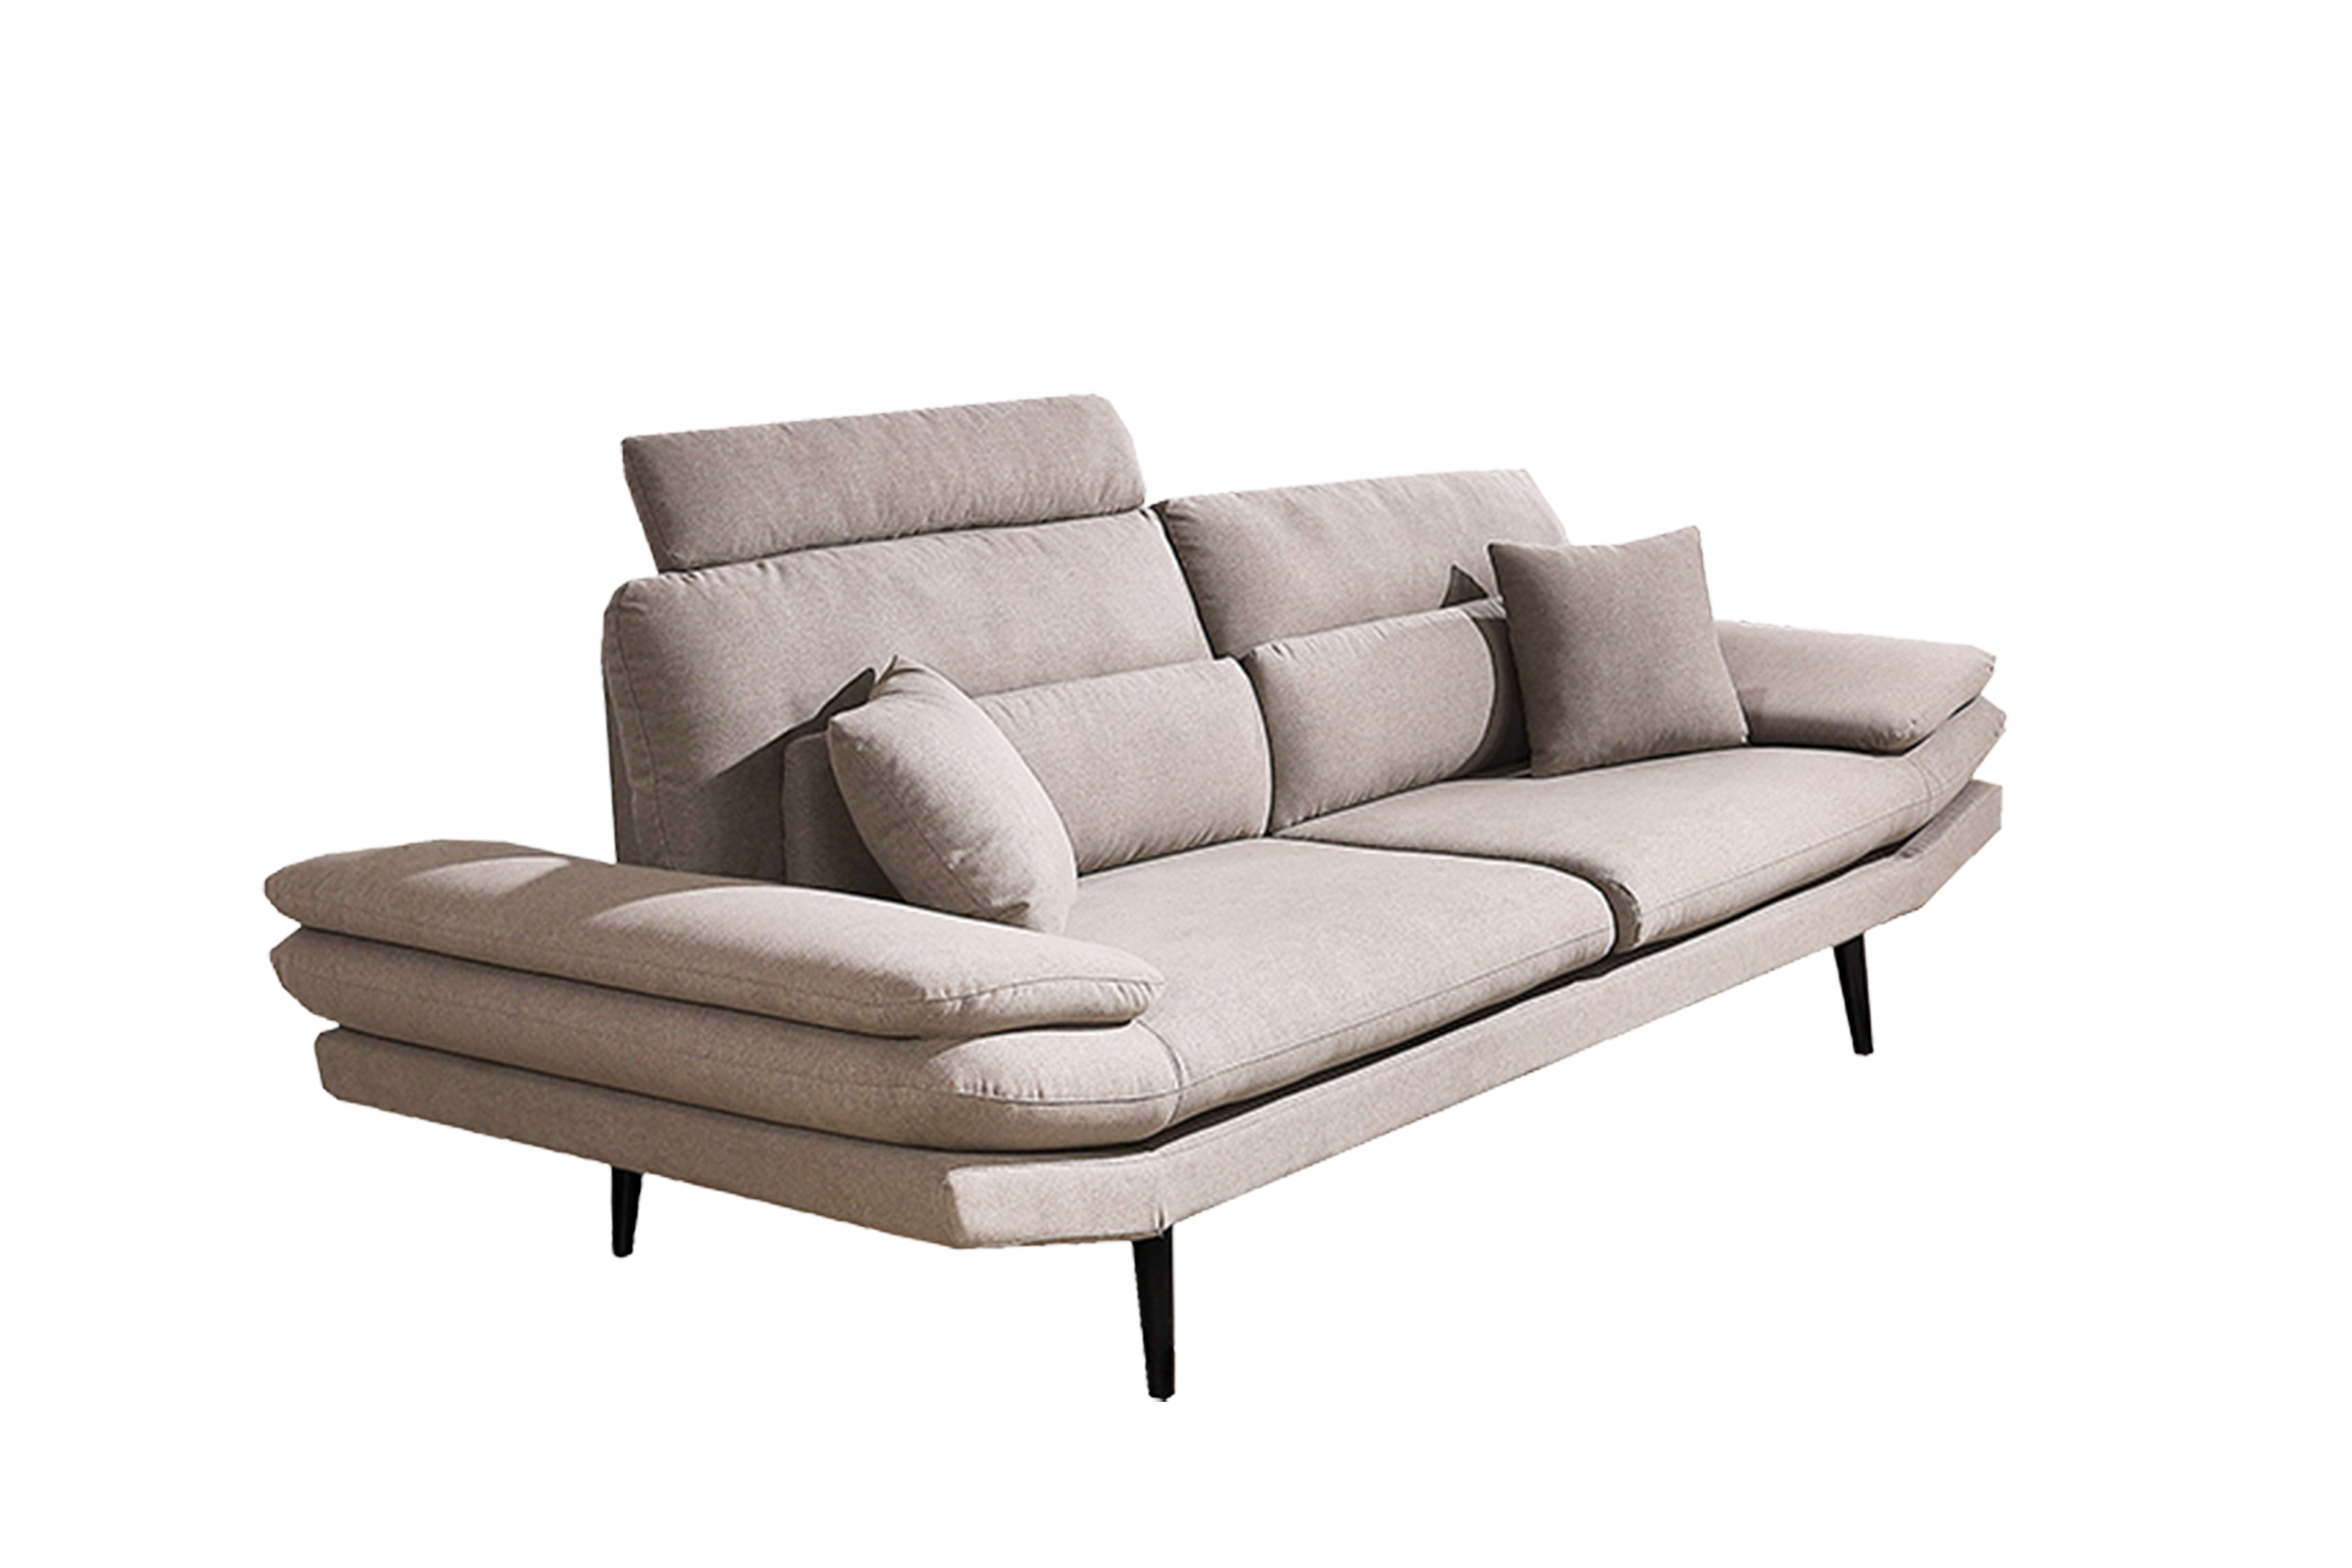 OMAR 3 Seater Sofa in Fabric by Castilla